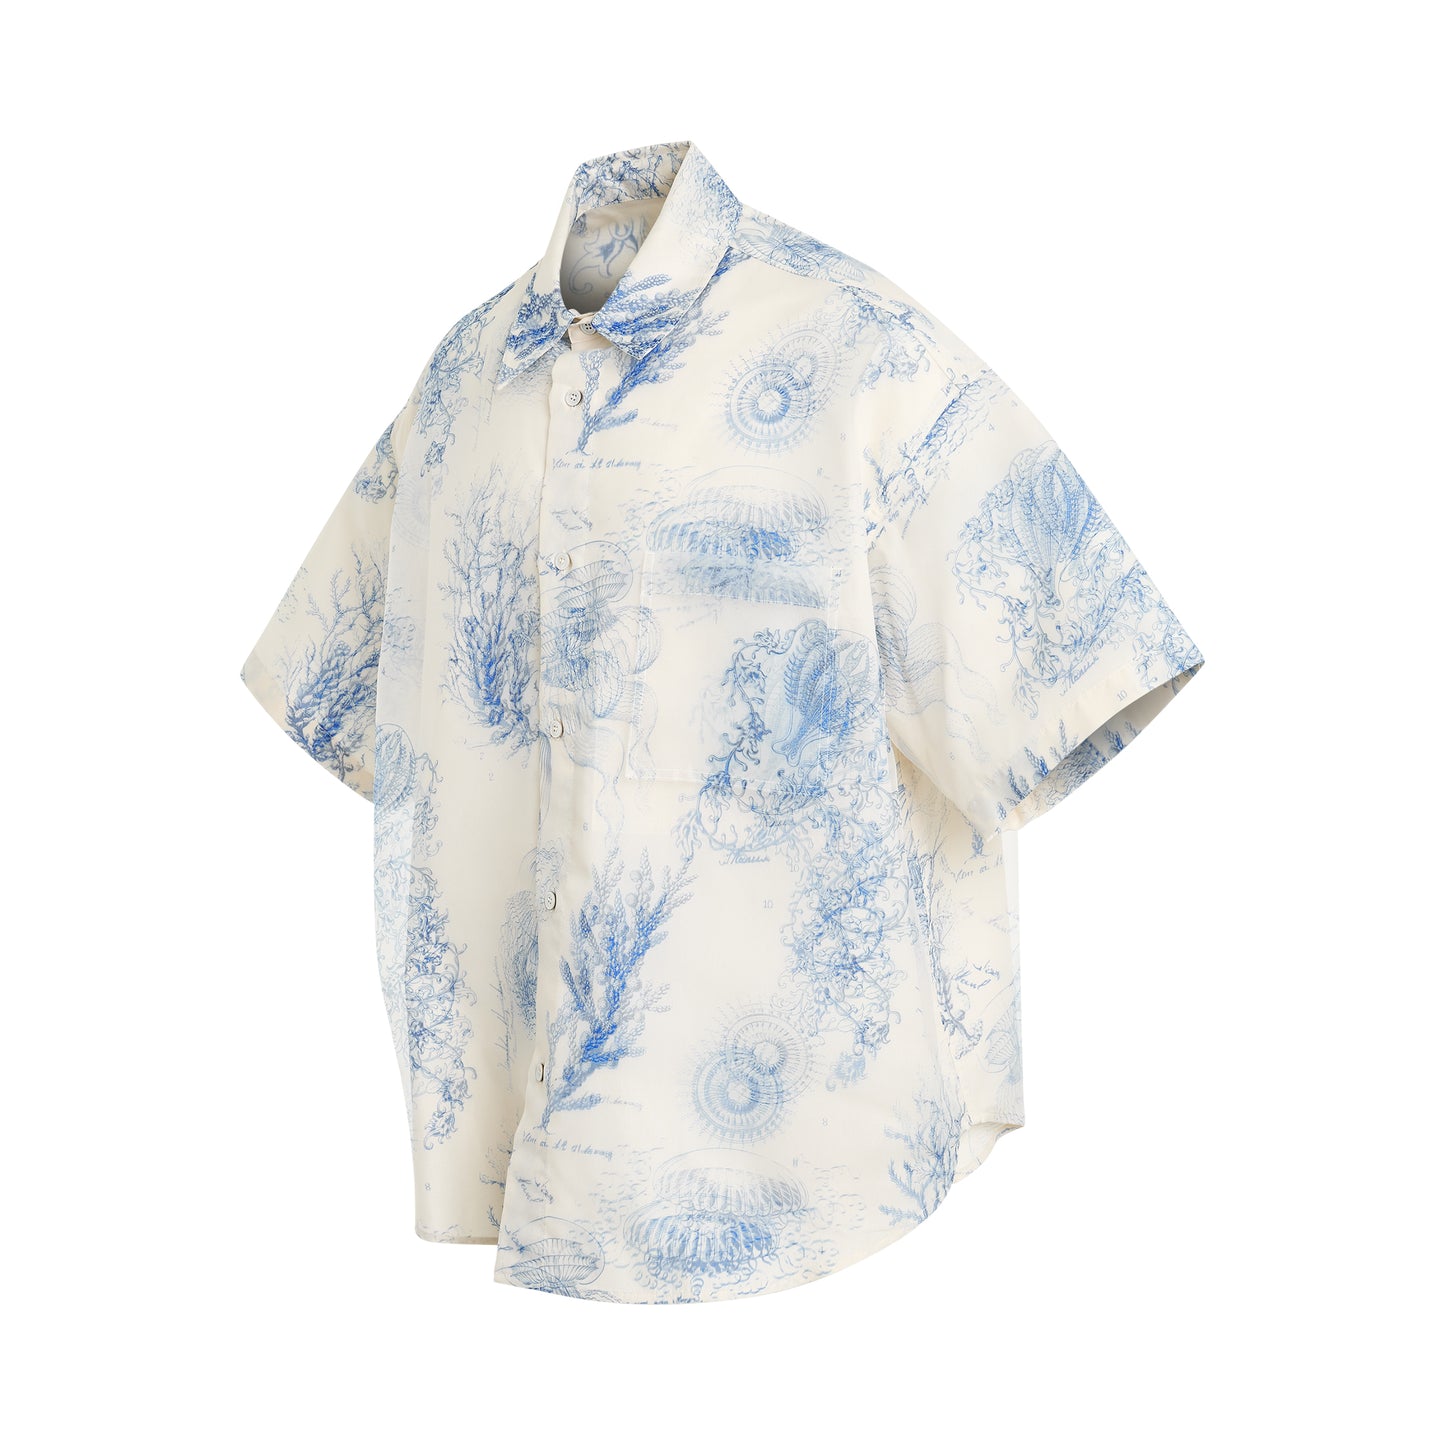 Jellyfish Print Short Sleeve Shirt in Ivory